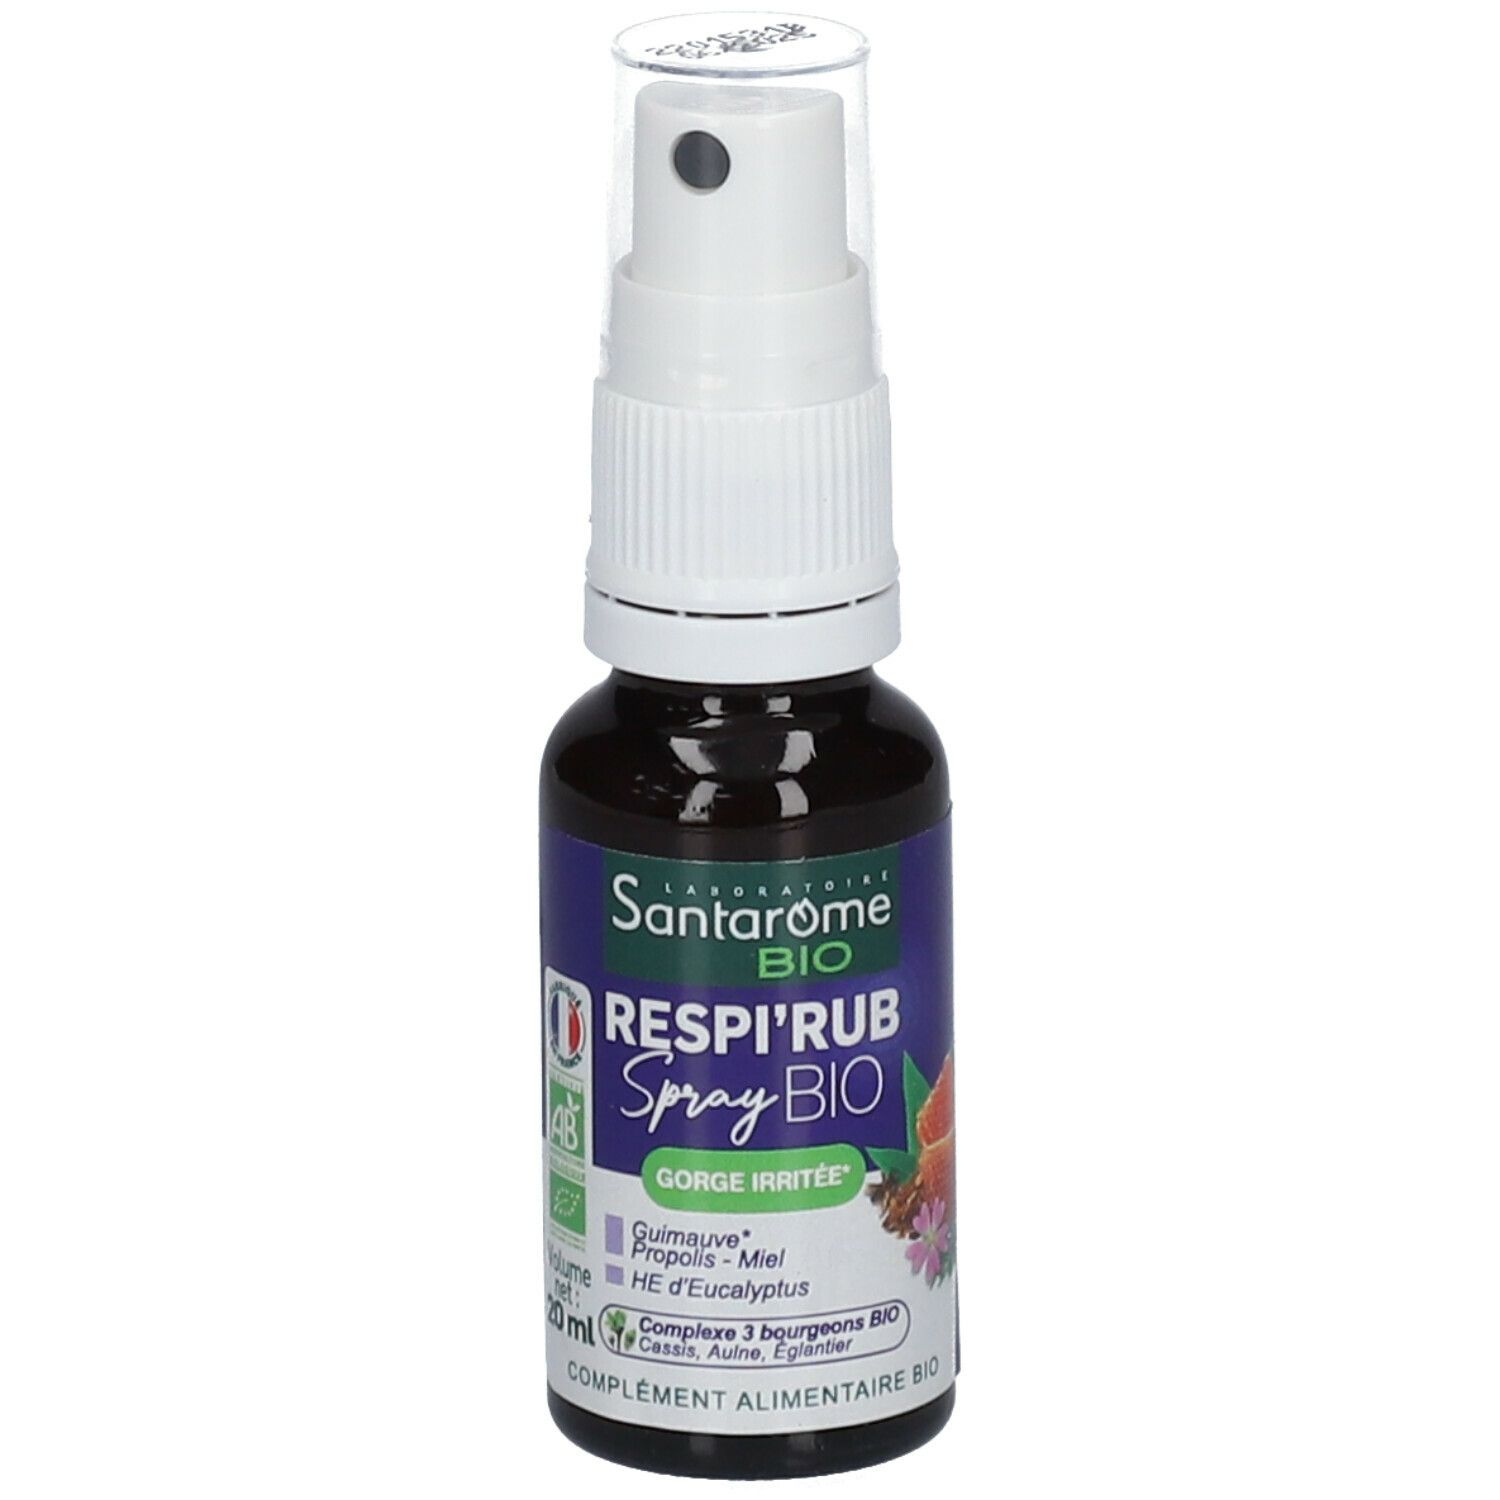 Santarome Respi'Rub Spray Bio